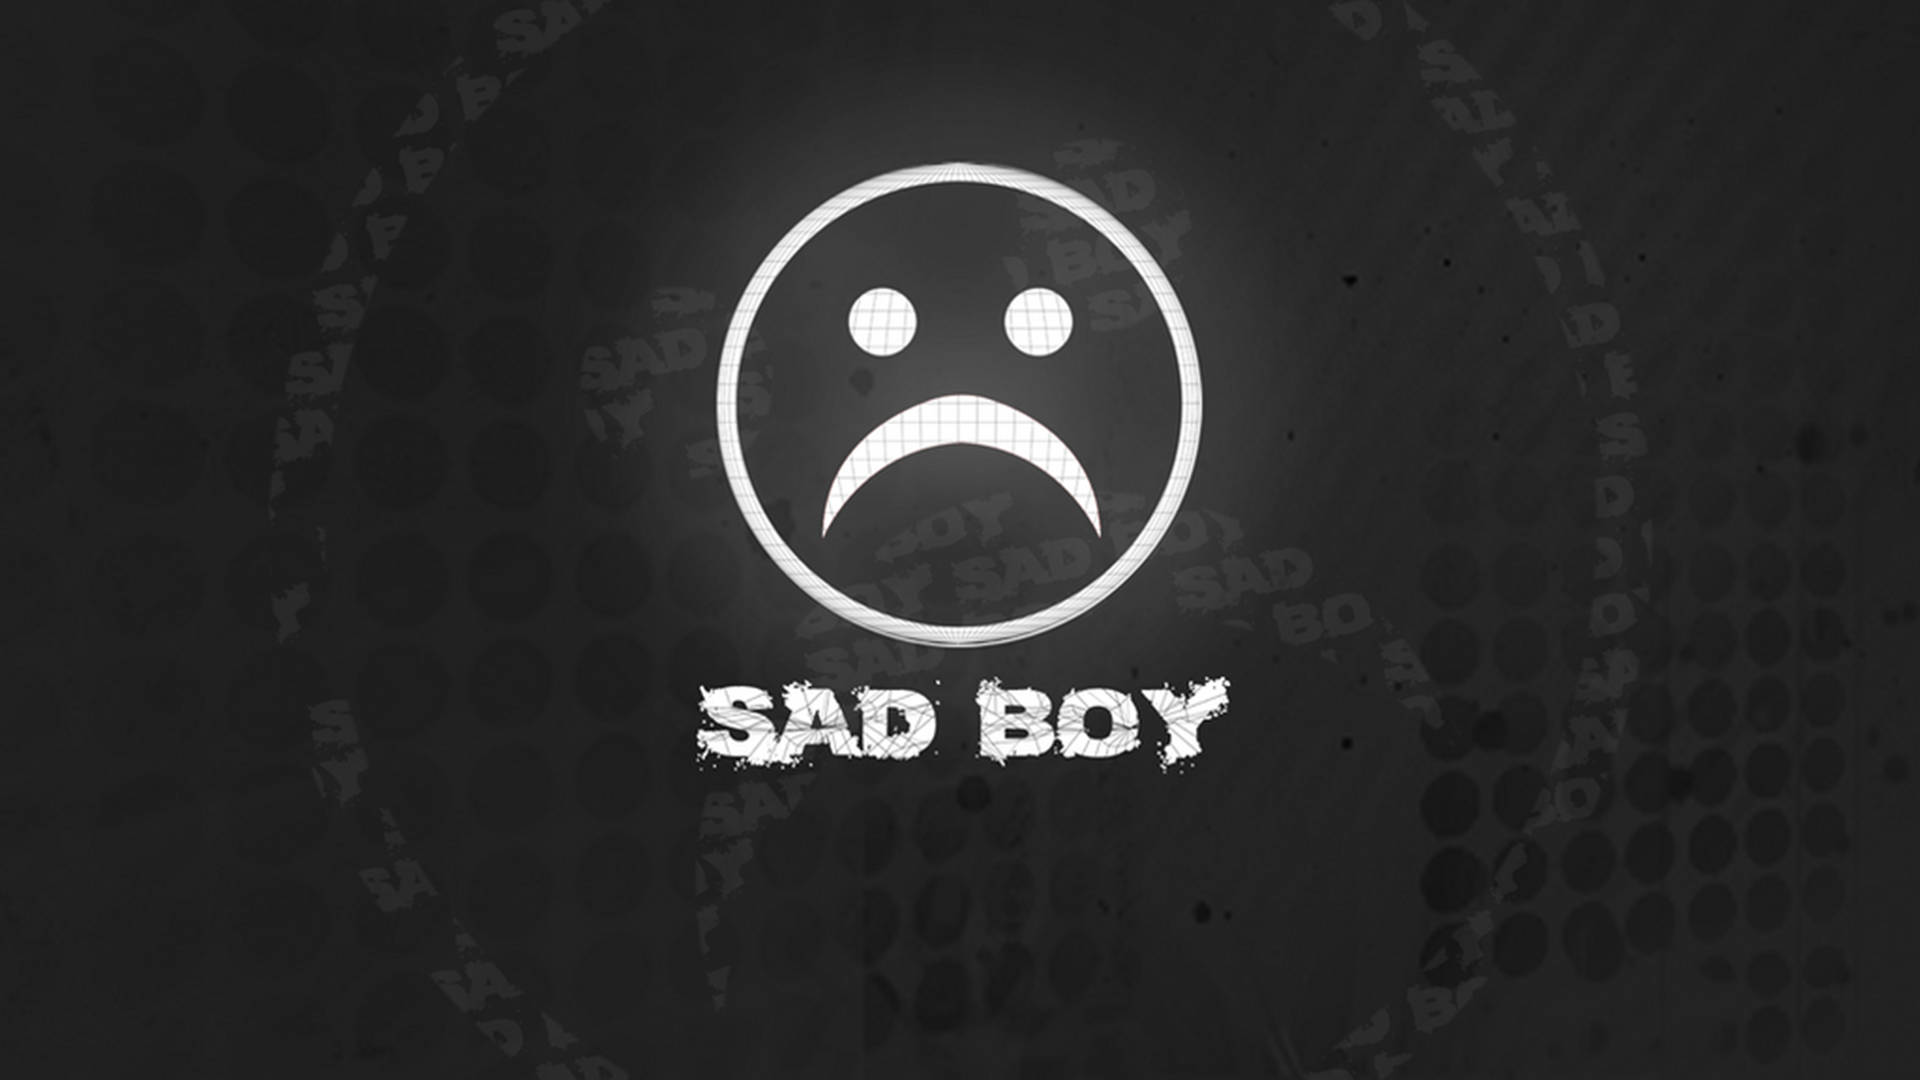 4032X2268 Sad Boy Wallpaper and Background